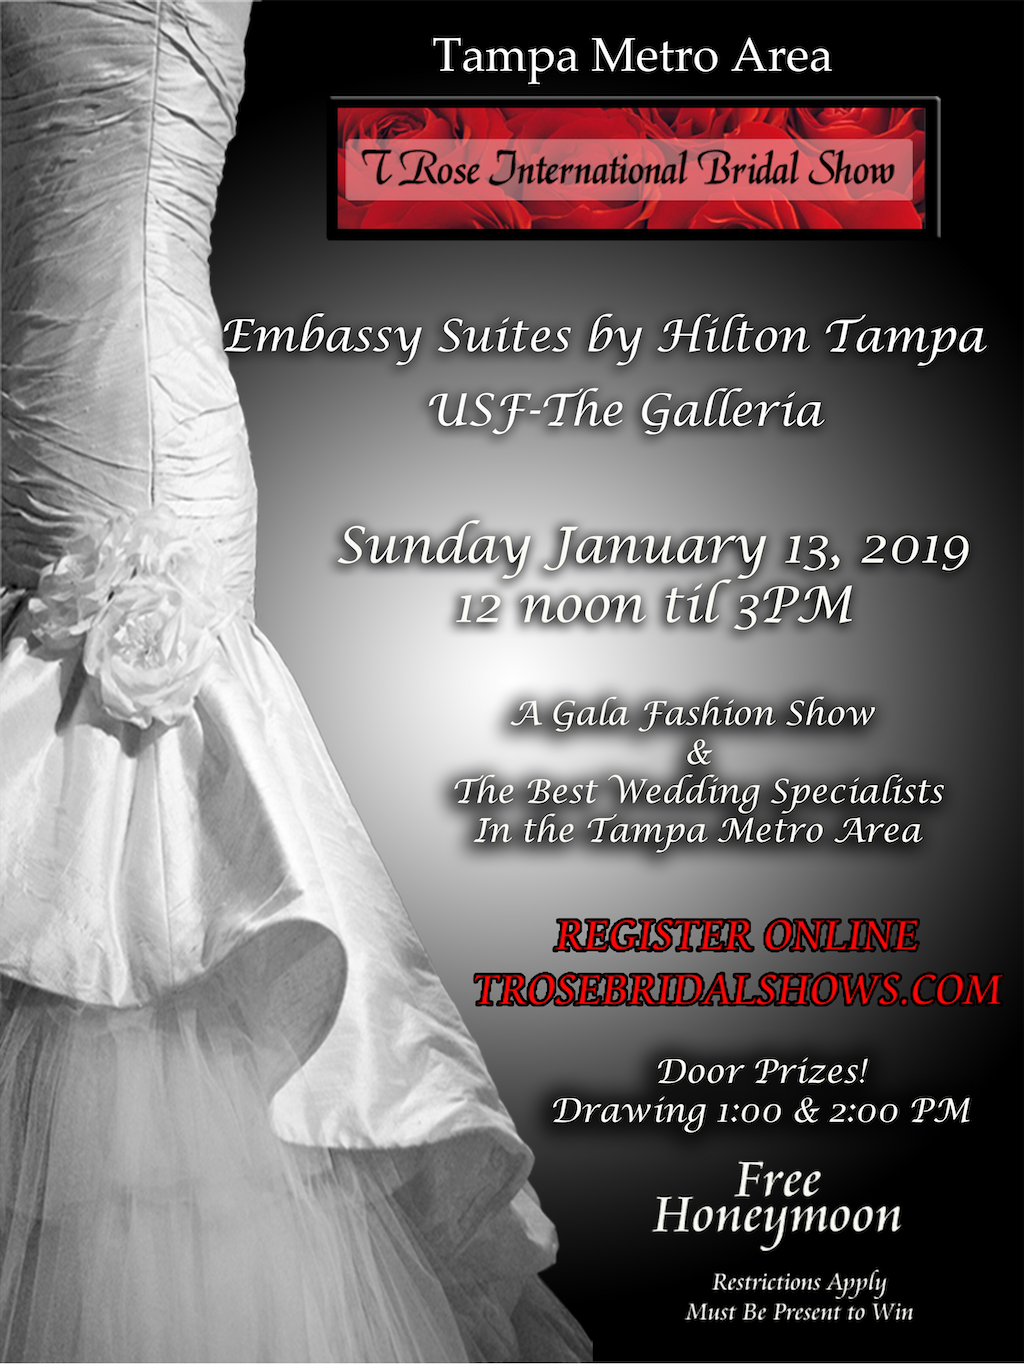 Tampa Bay Bridal Show, Sunday January 13, 2019 at Embassy Suites Tampa USF